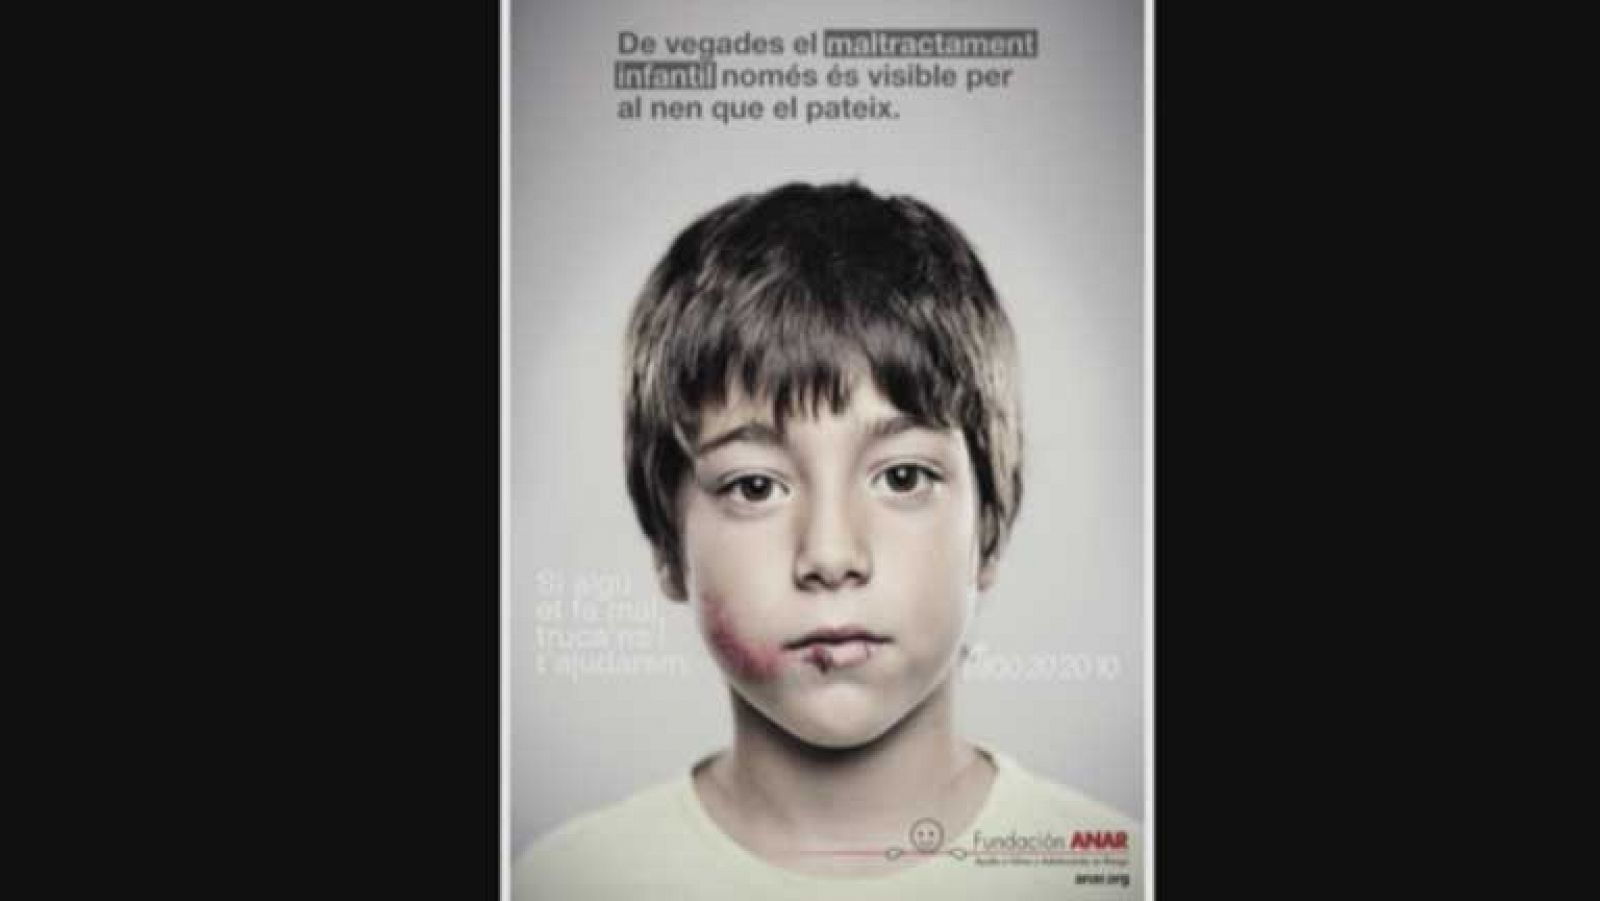 Telediario 1: Aumenta la violencia infantil  | RTVE Play